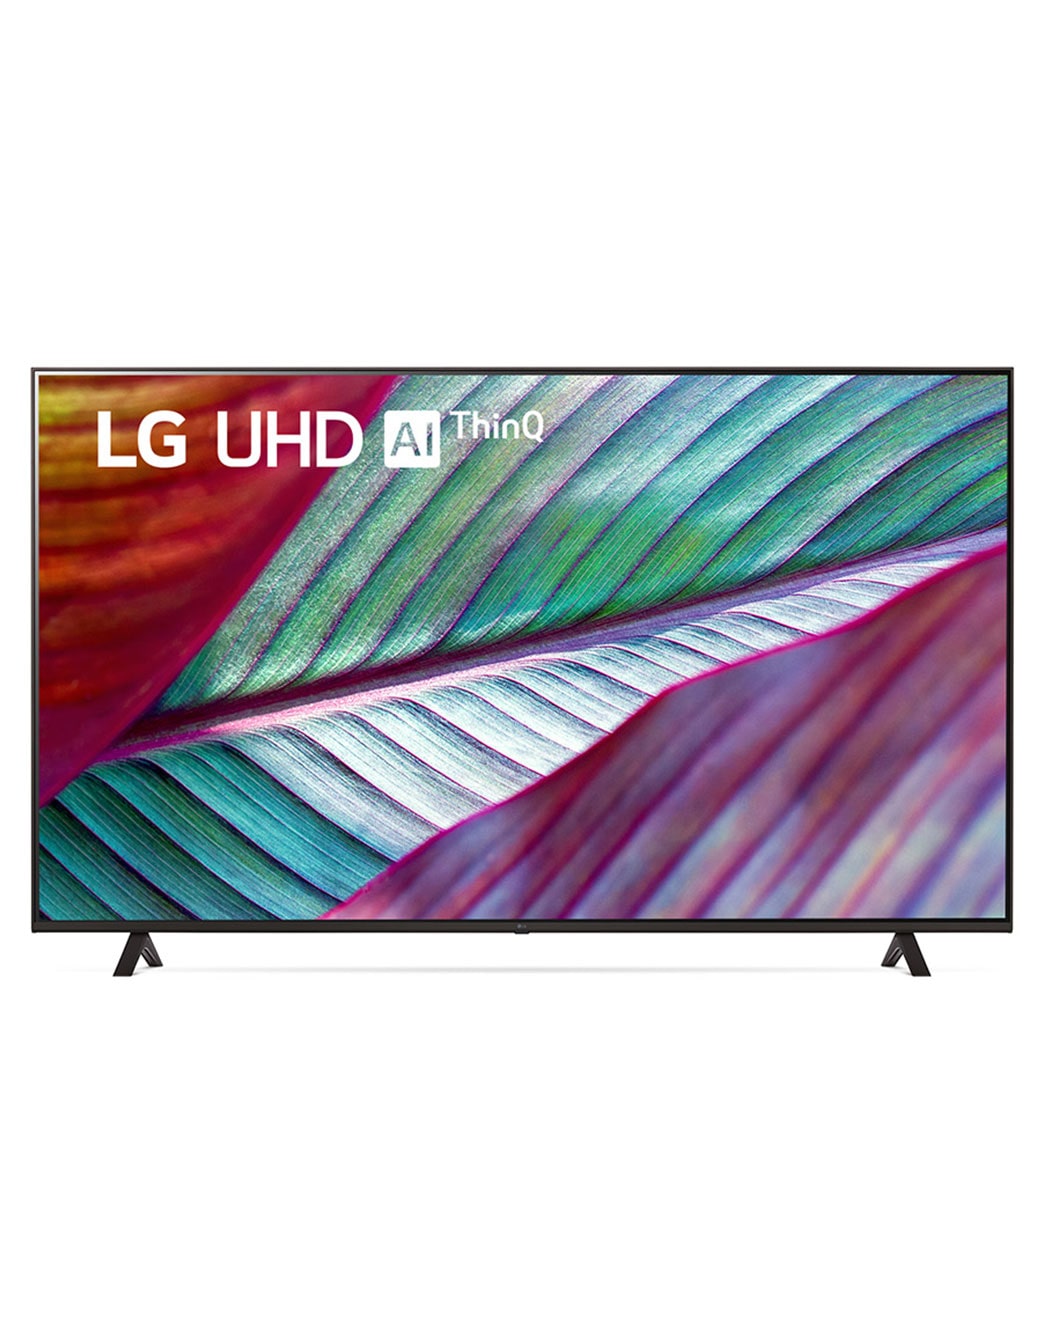 LG UHD UR80: 2023 70 inch 4K Smart TV 2023